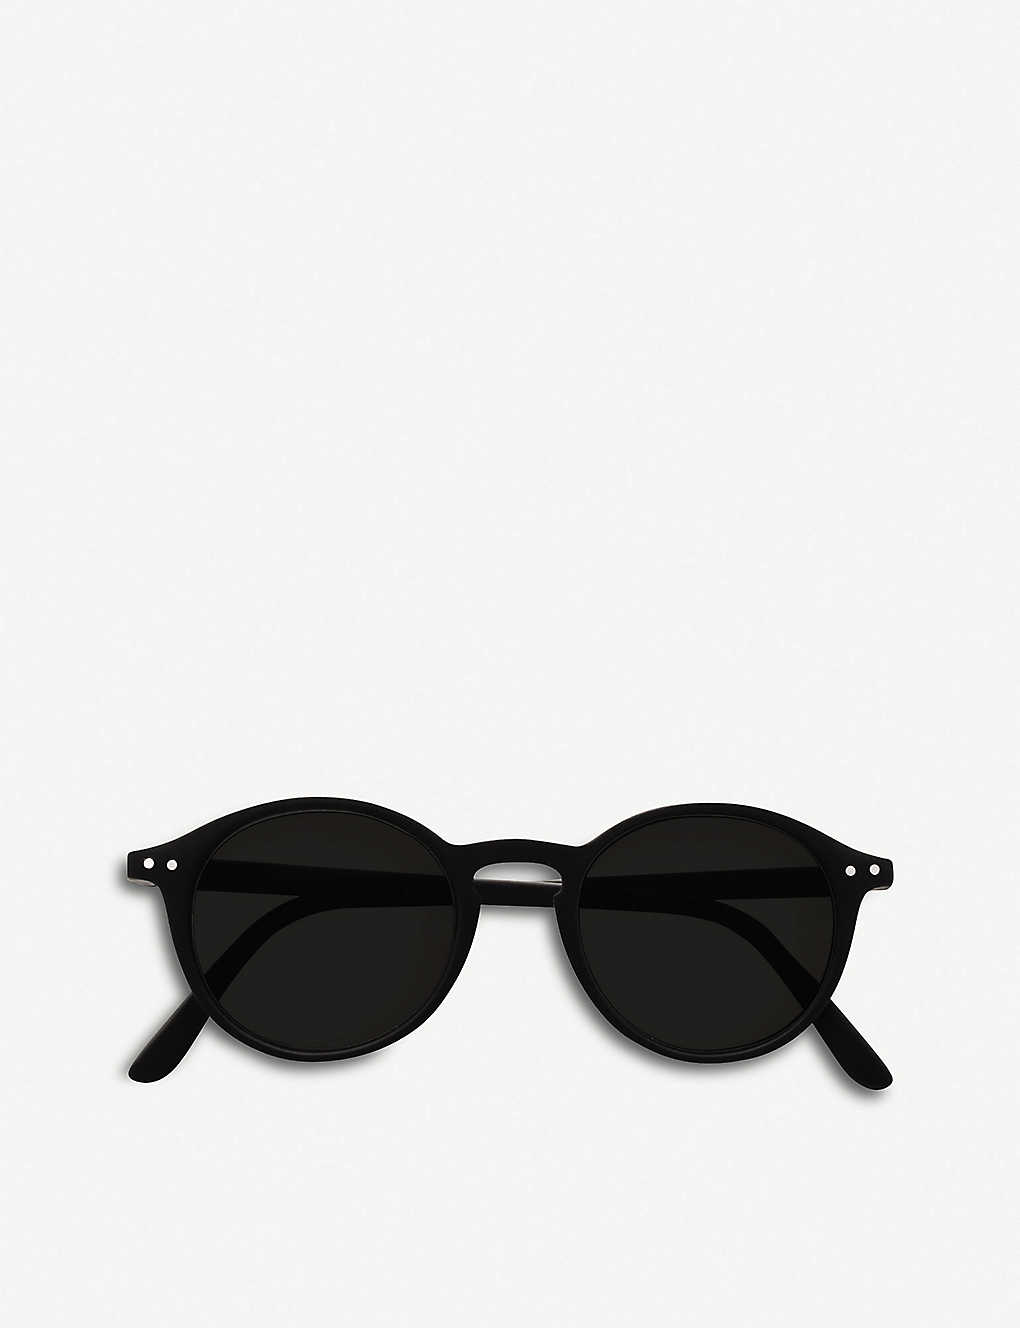 Shop Izipizi Womens Sun #d Sunglasses +2.0